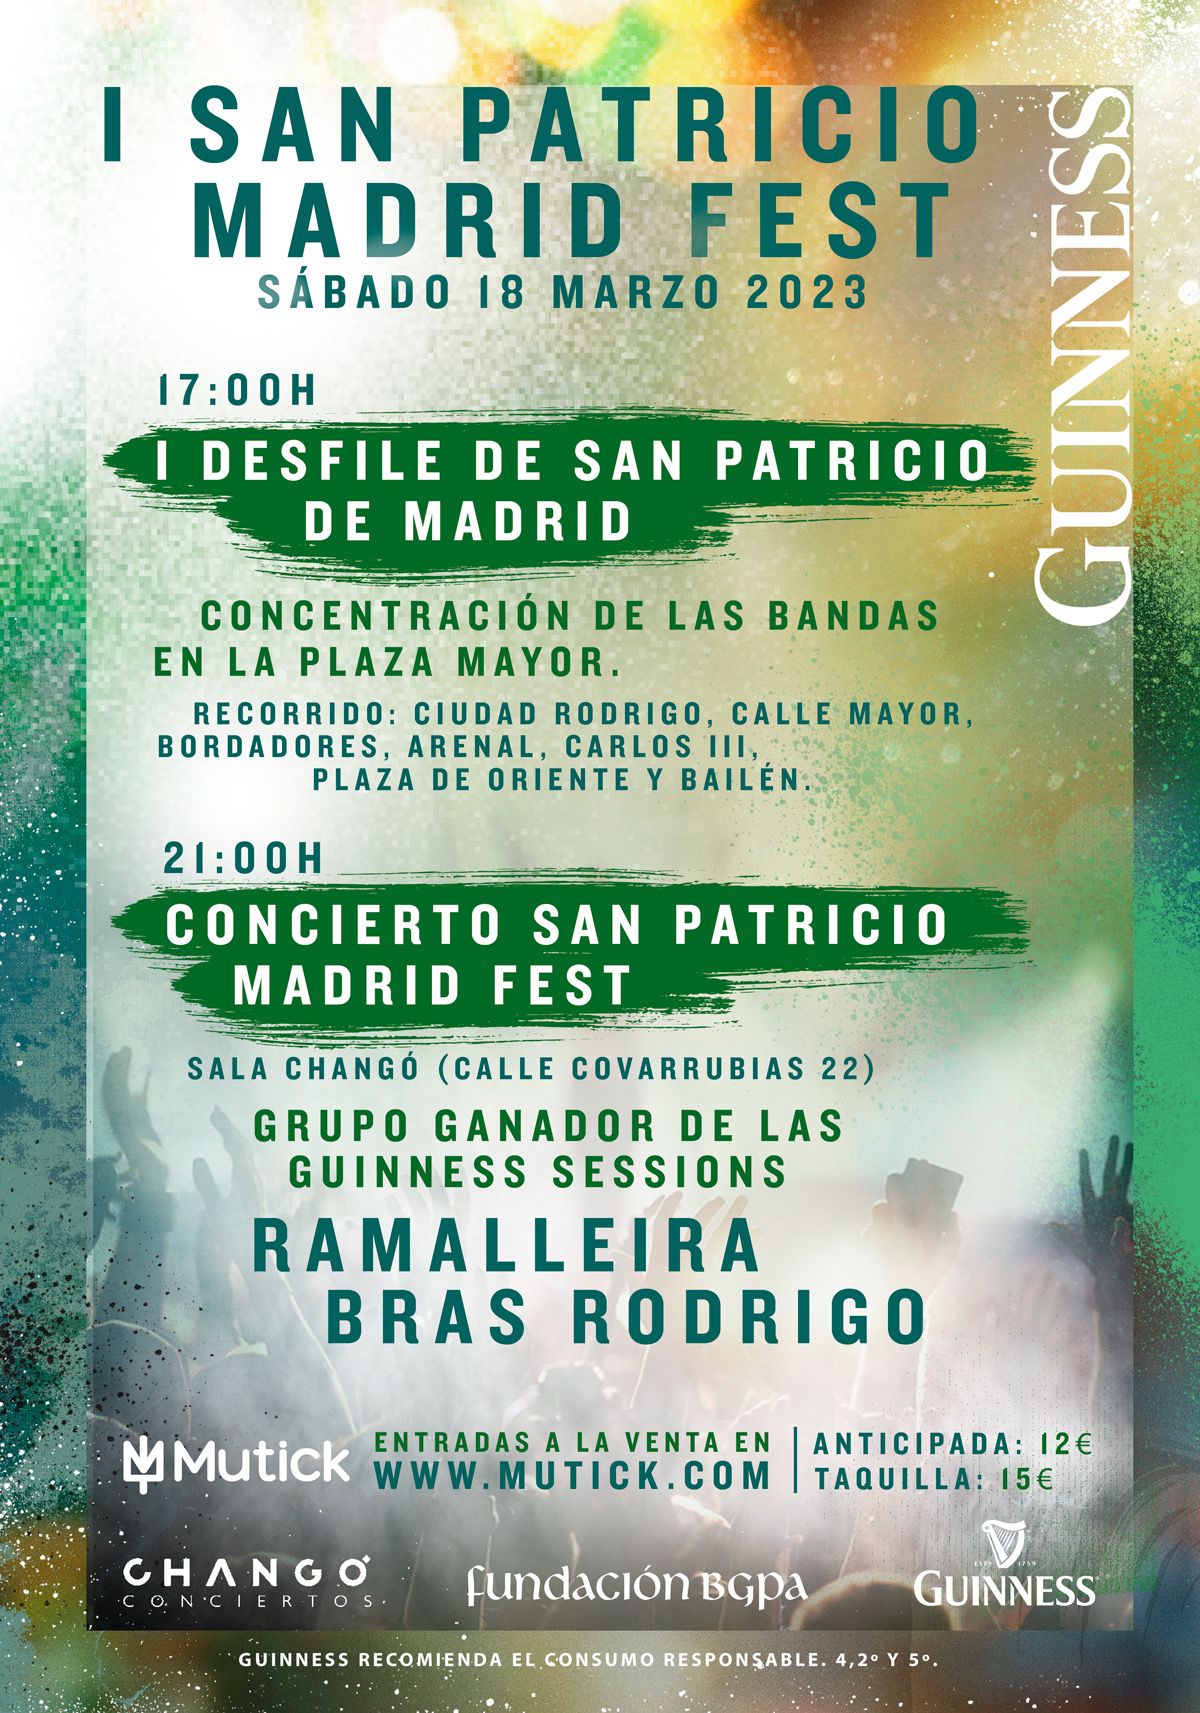 GUINNESS presenta BRAS RODRIGO + Ramalleira en Madrid - Mutick